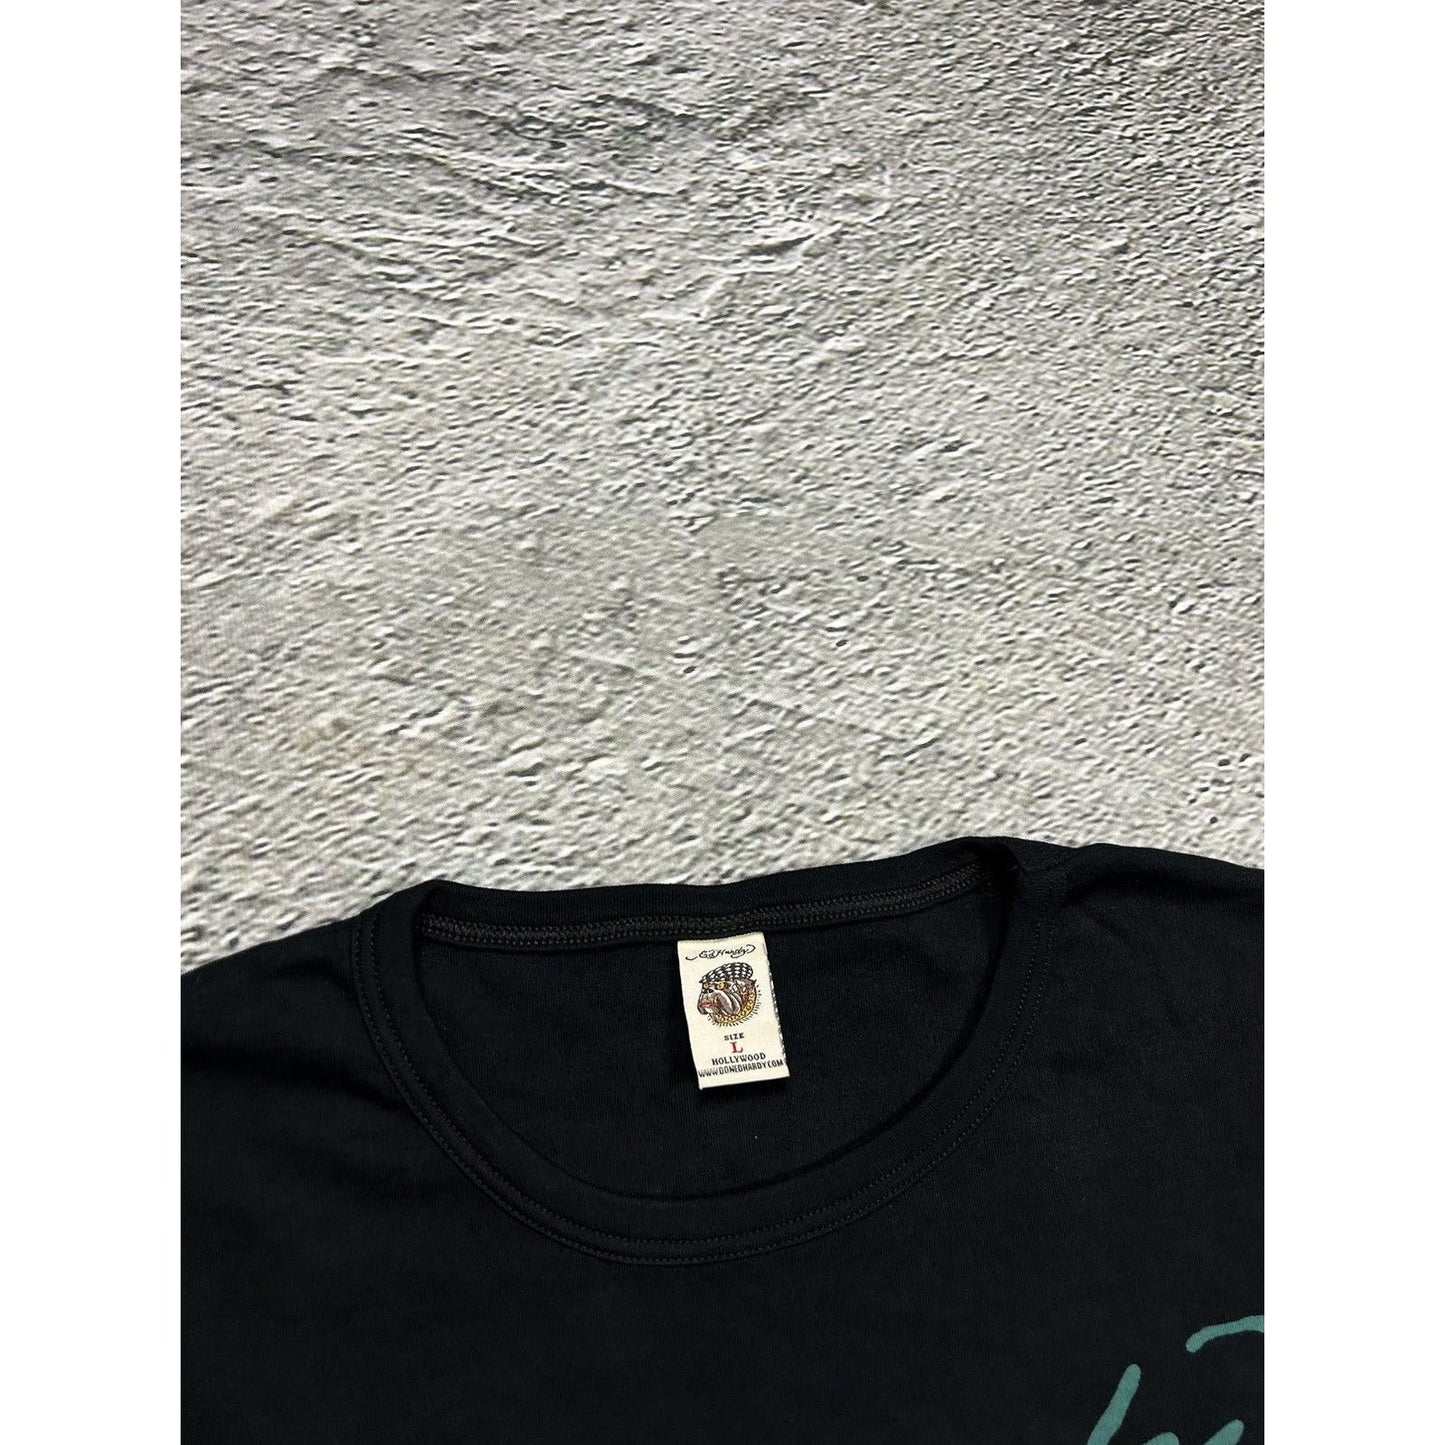 Ed Hardy Christian Audigier vintage black t-shirt Y2K